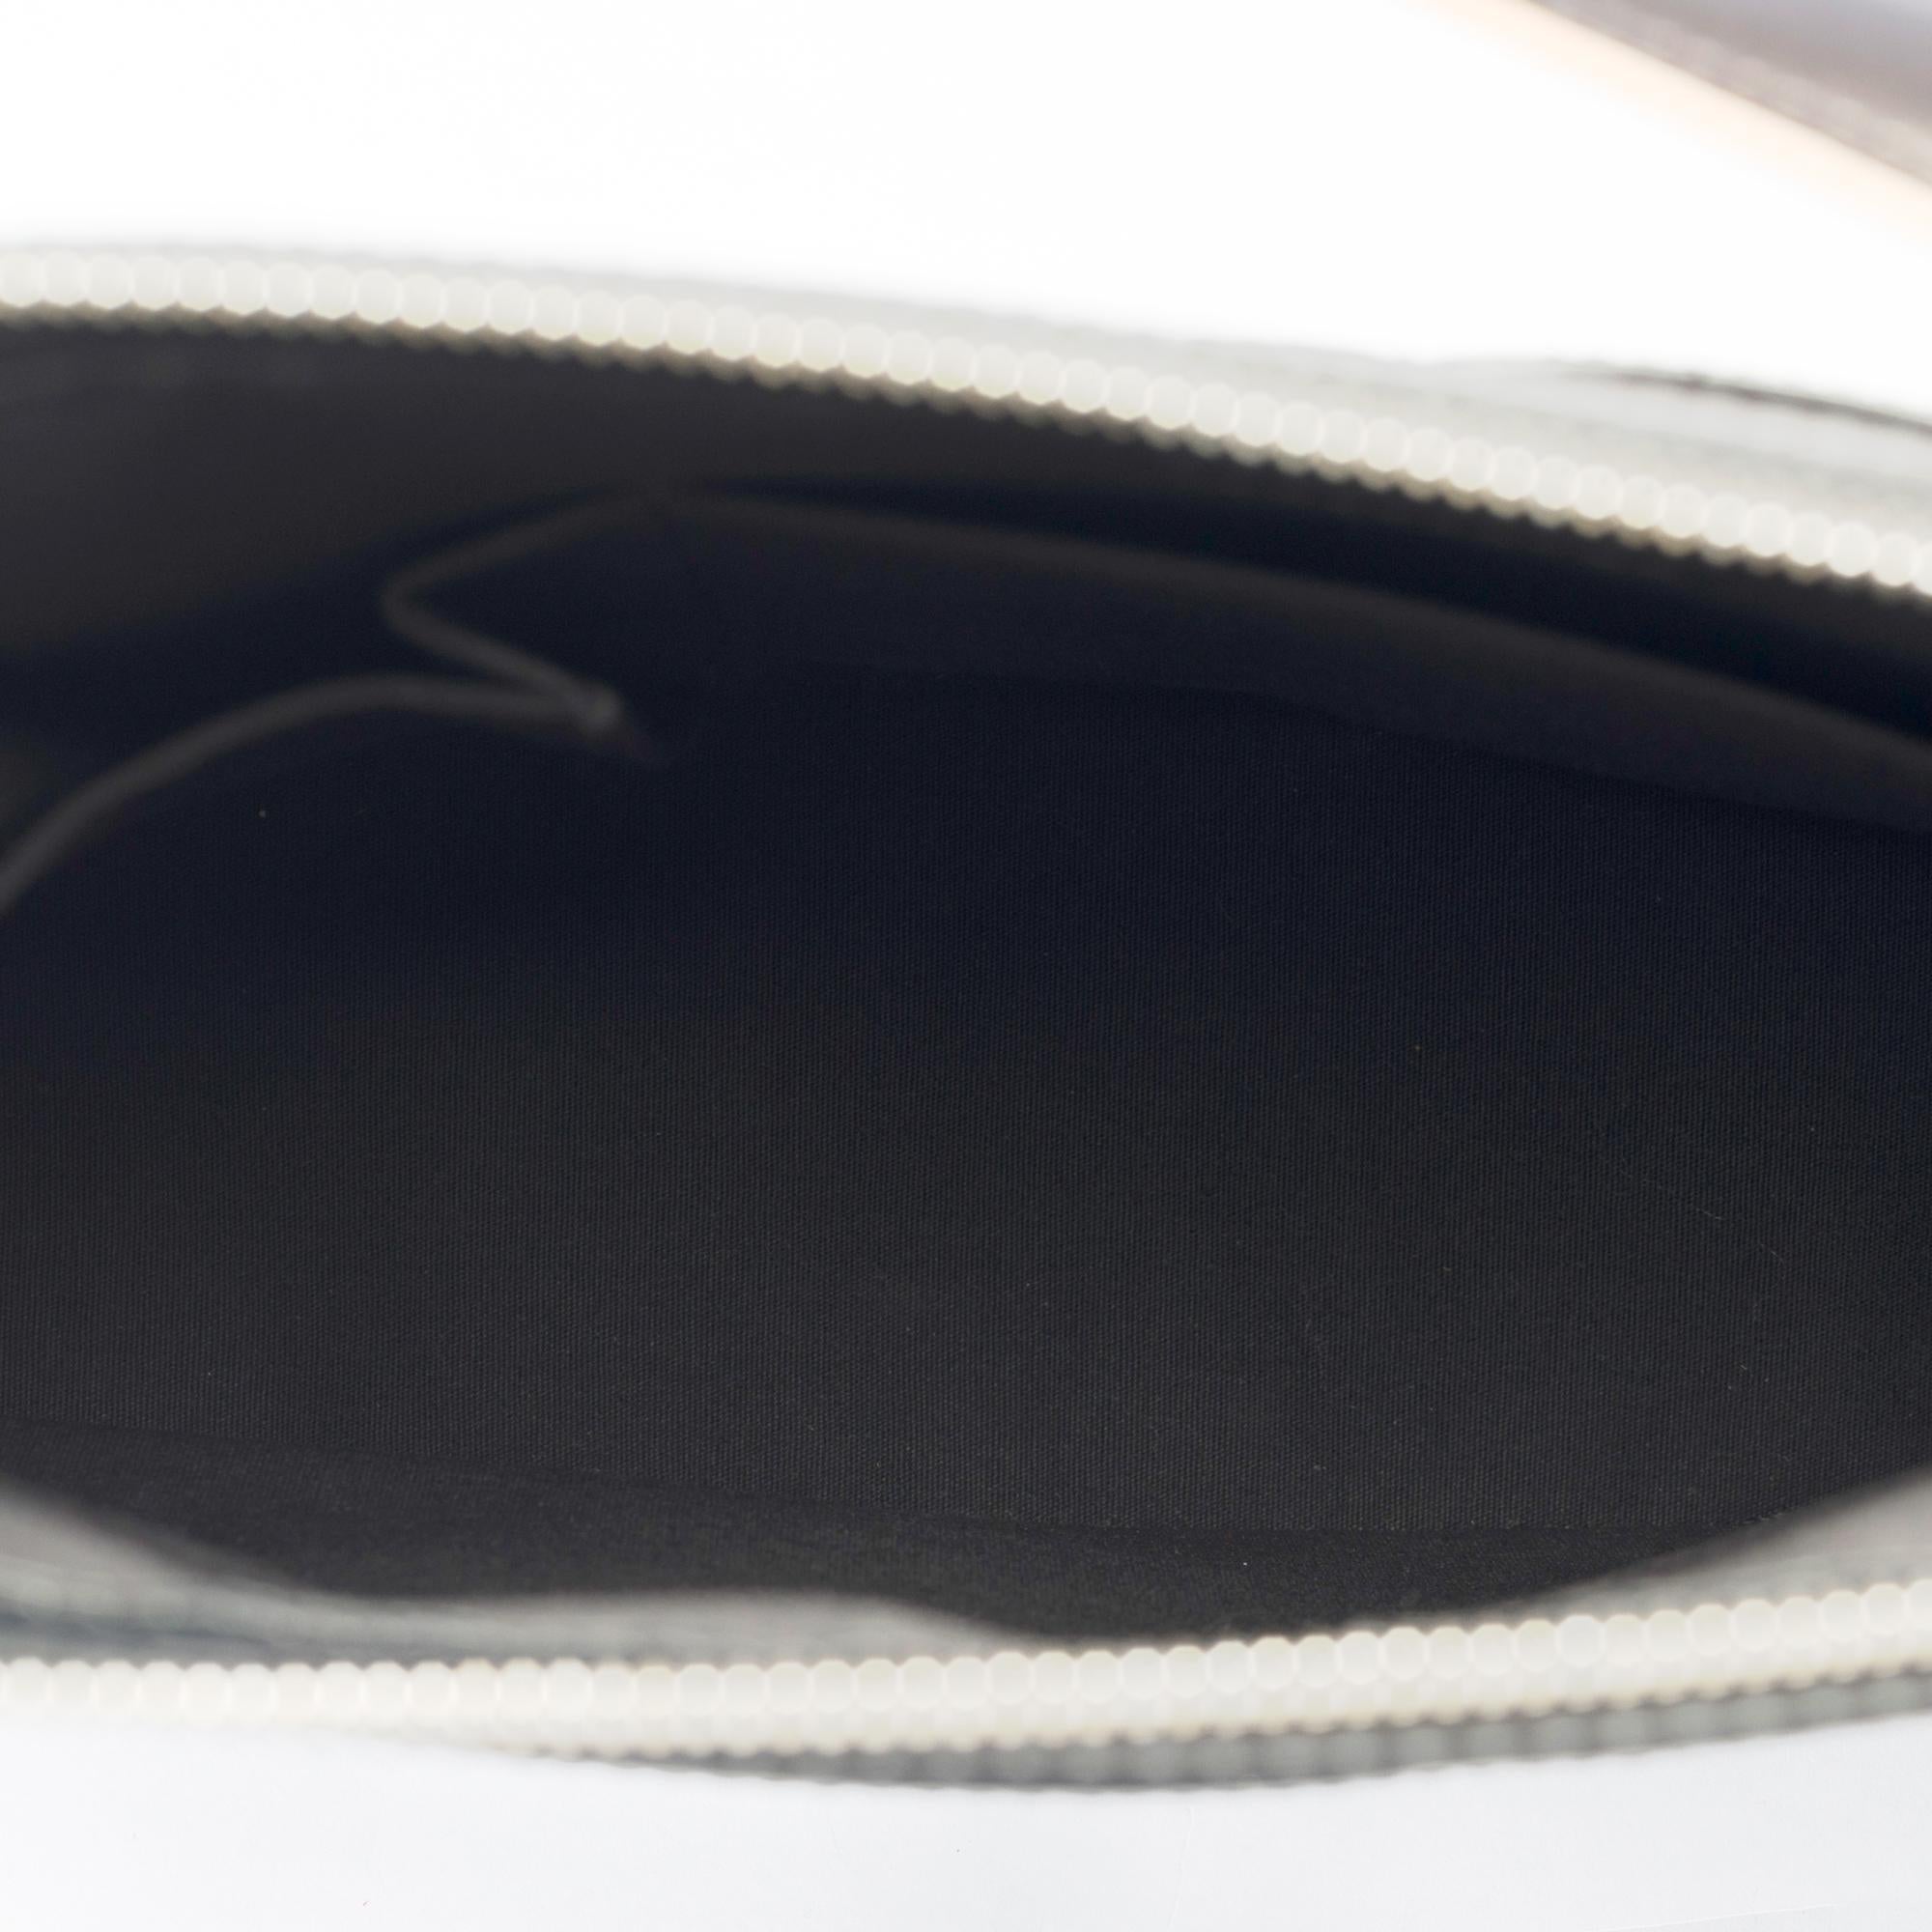 Louis Vuitton Sutter shoulder bag in silver monogram leather, SHW For Sale 4